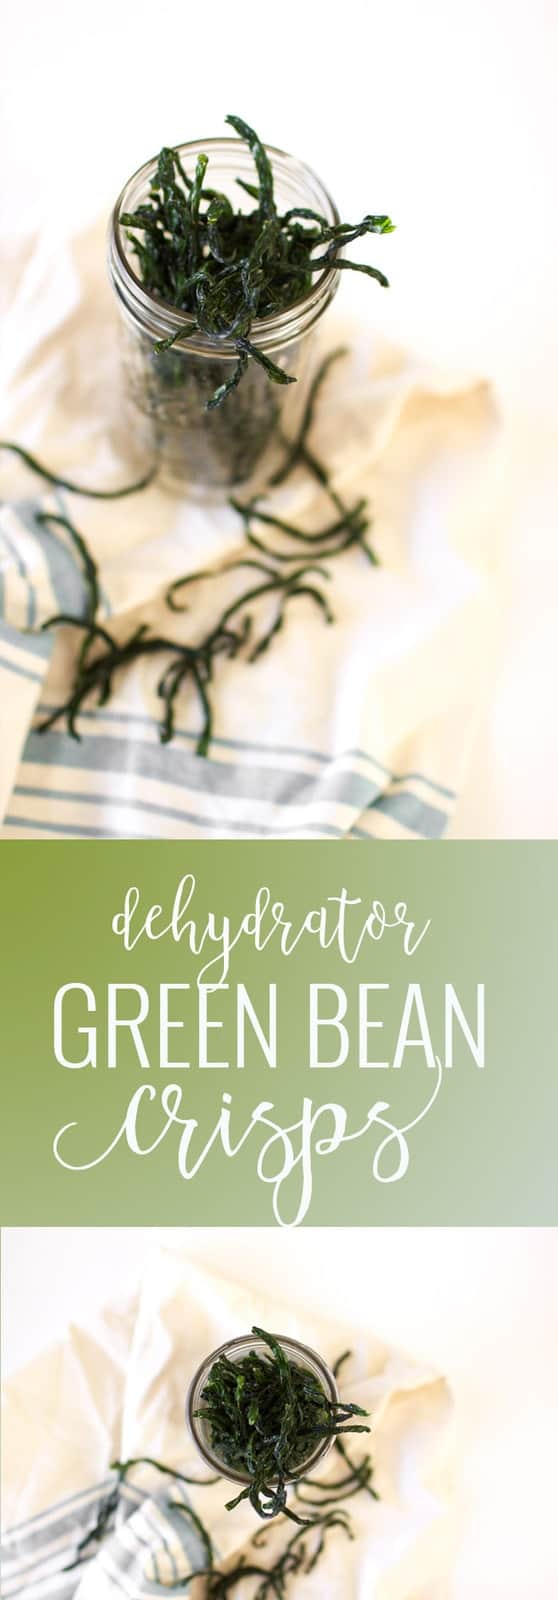 Green Bean Crisps pinterest image